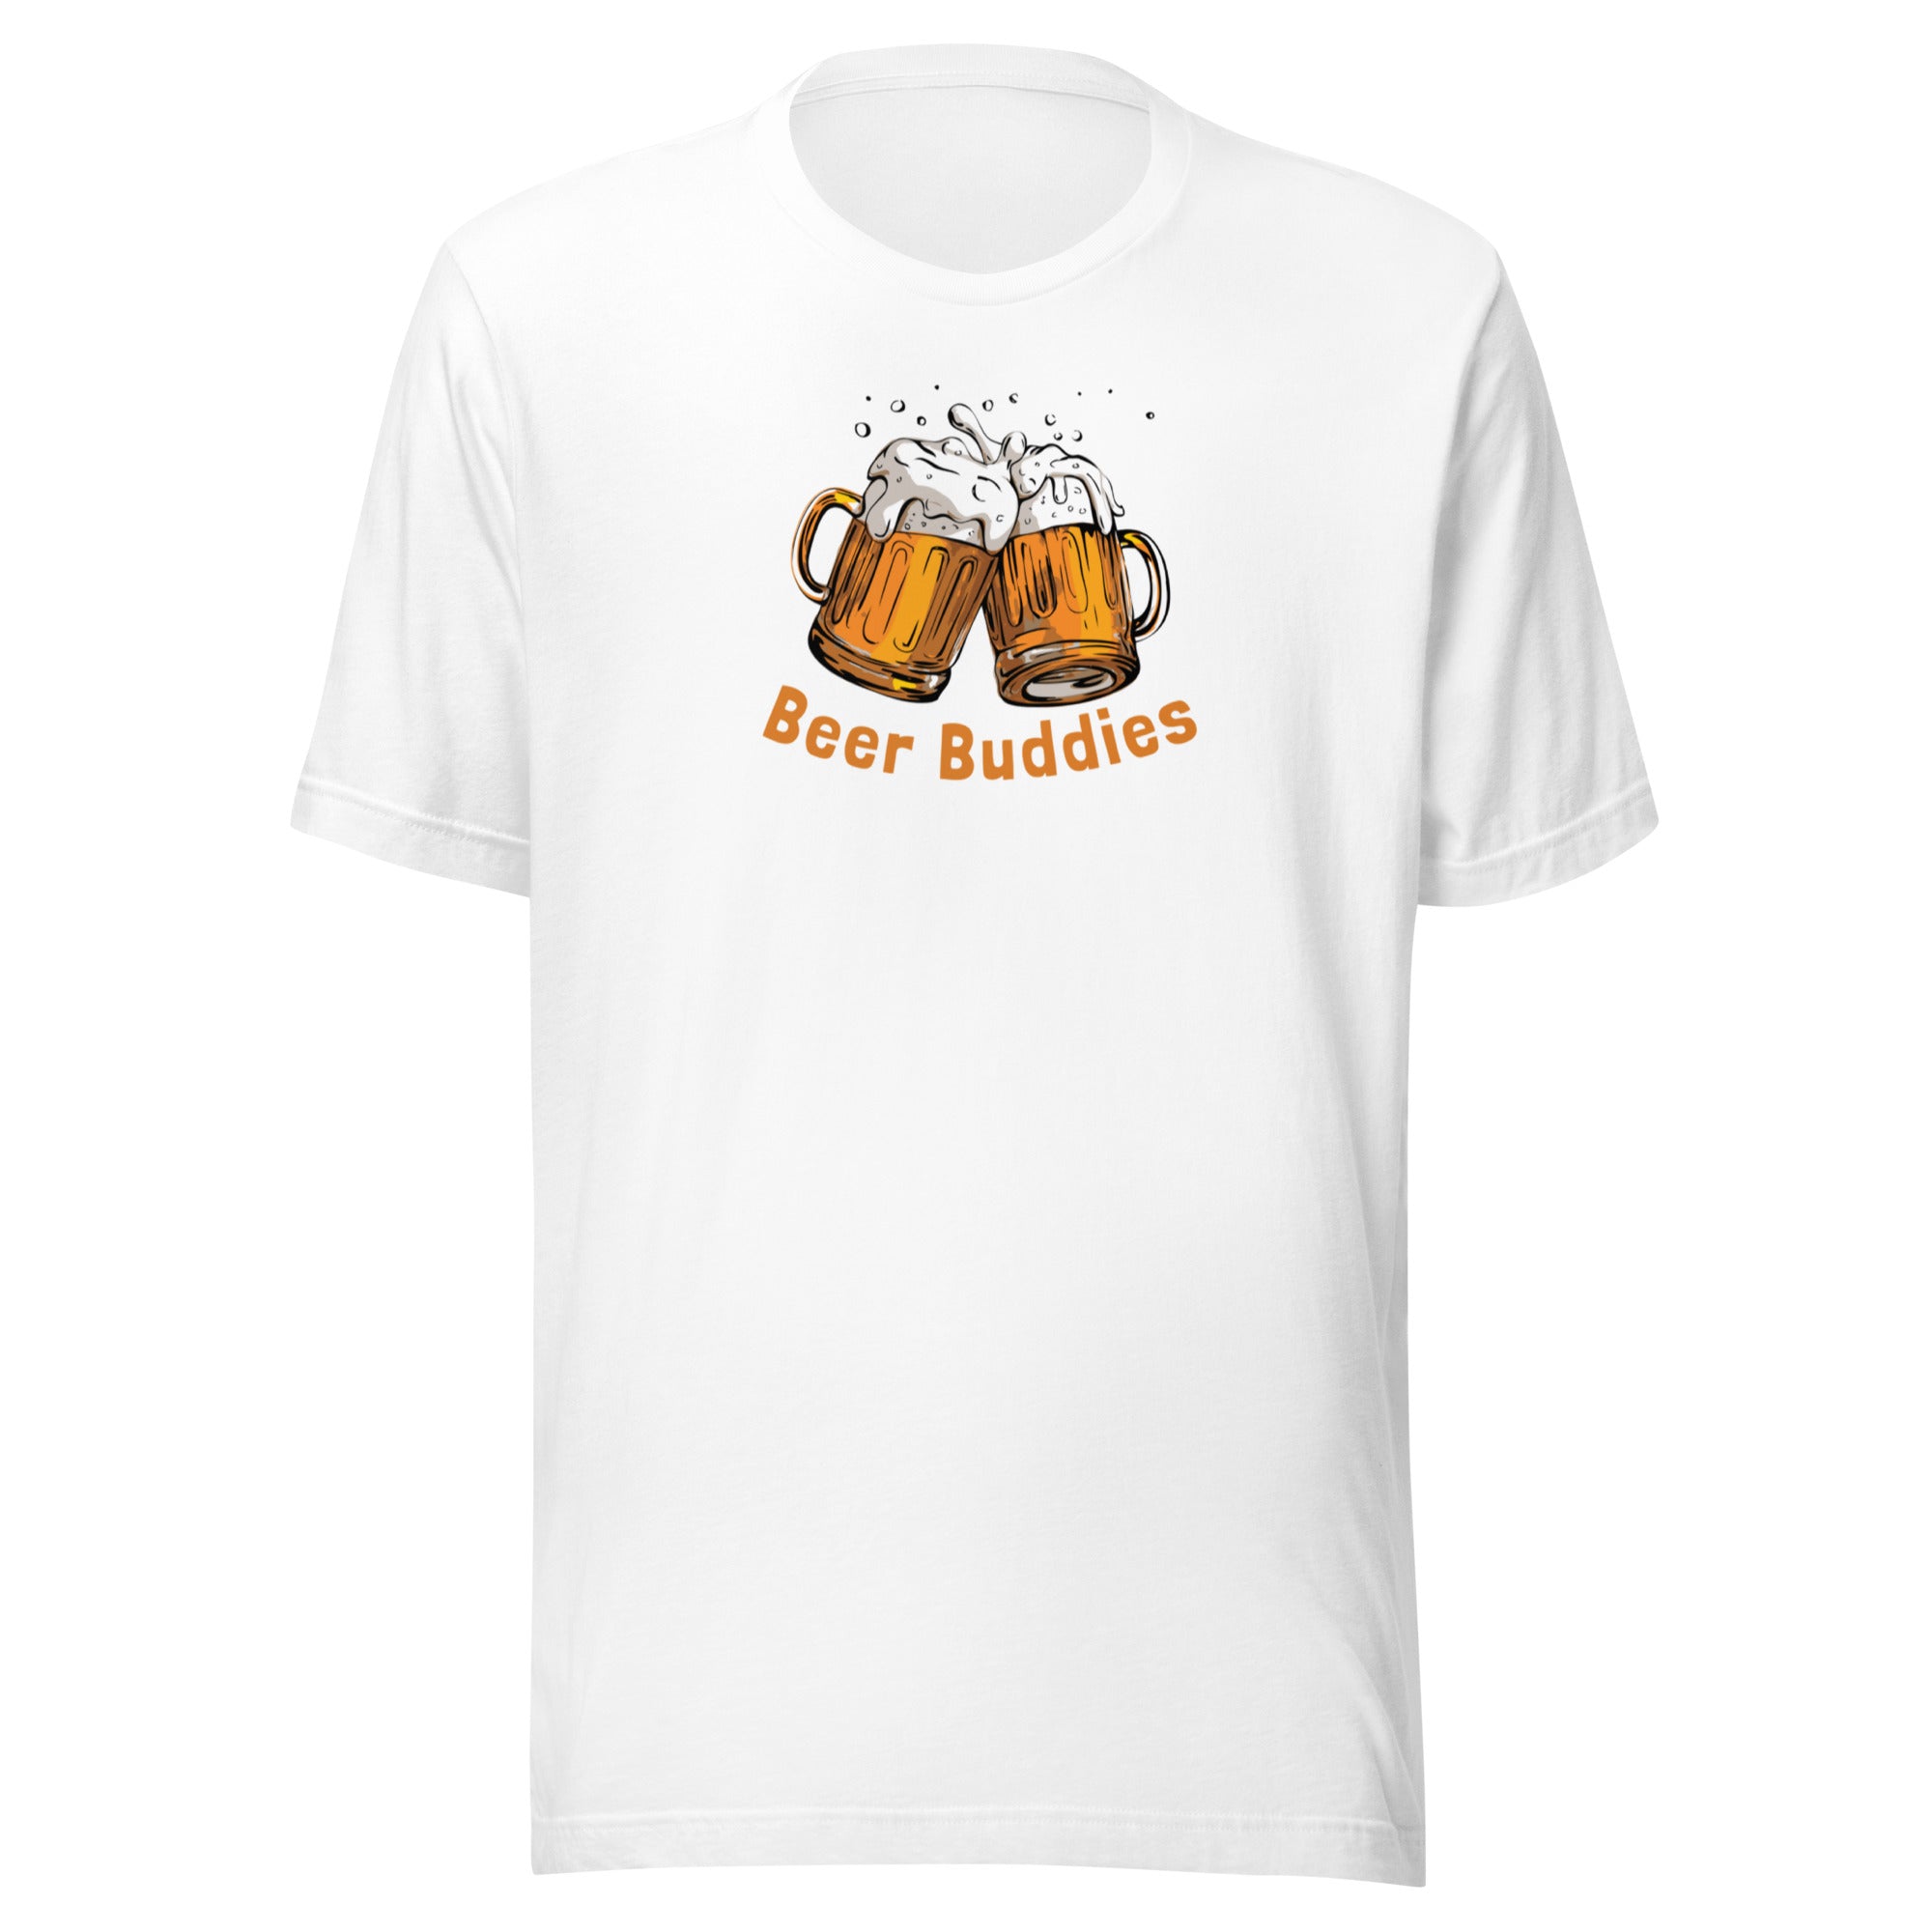 Beer buddies Men t-shirt